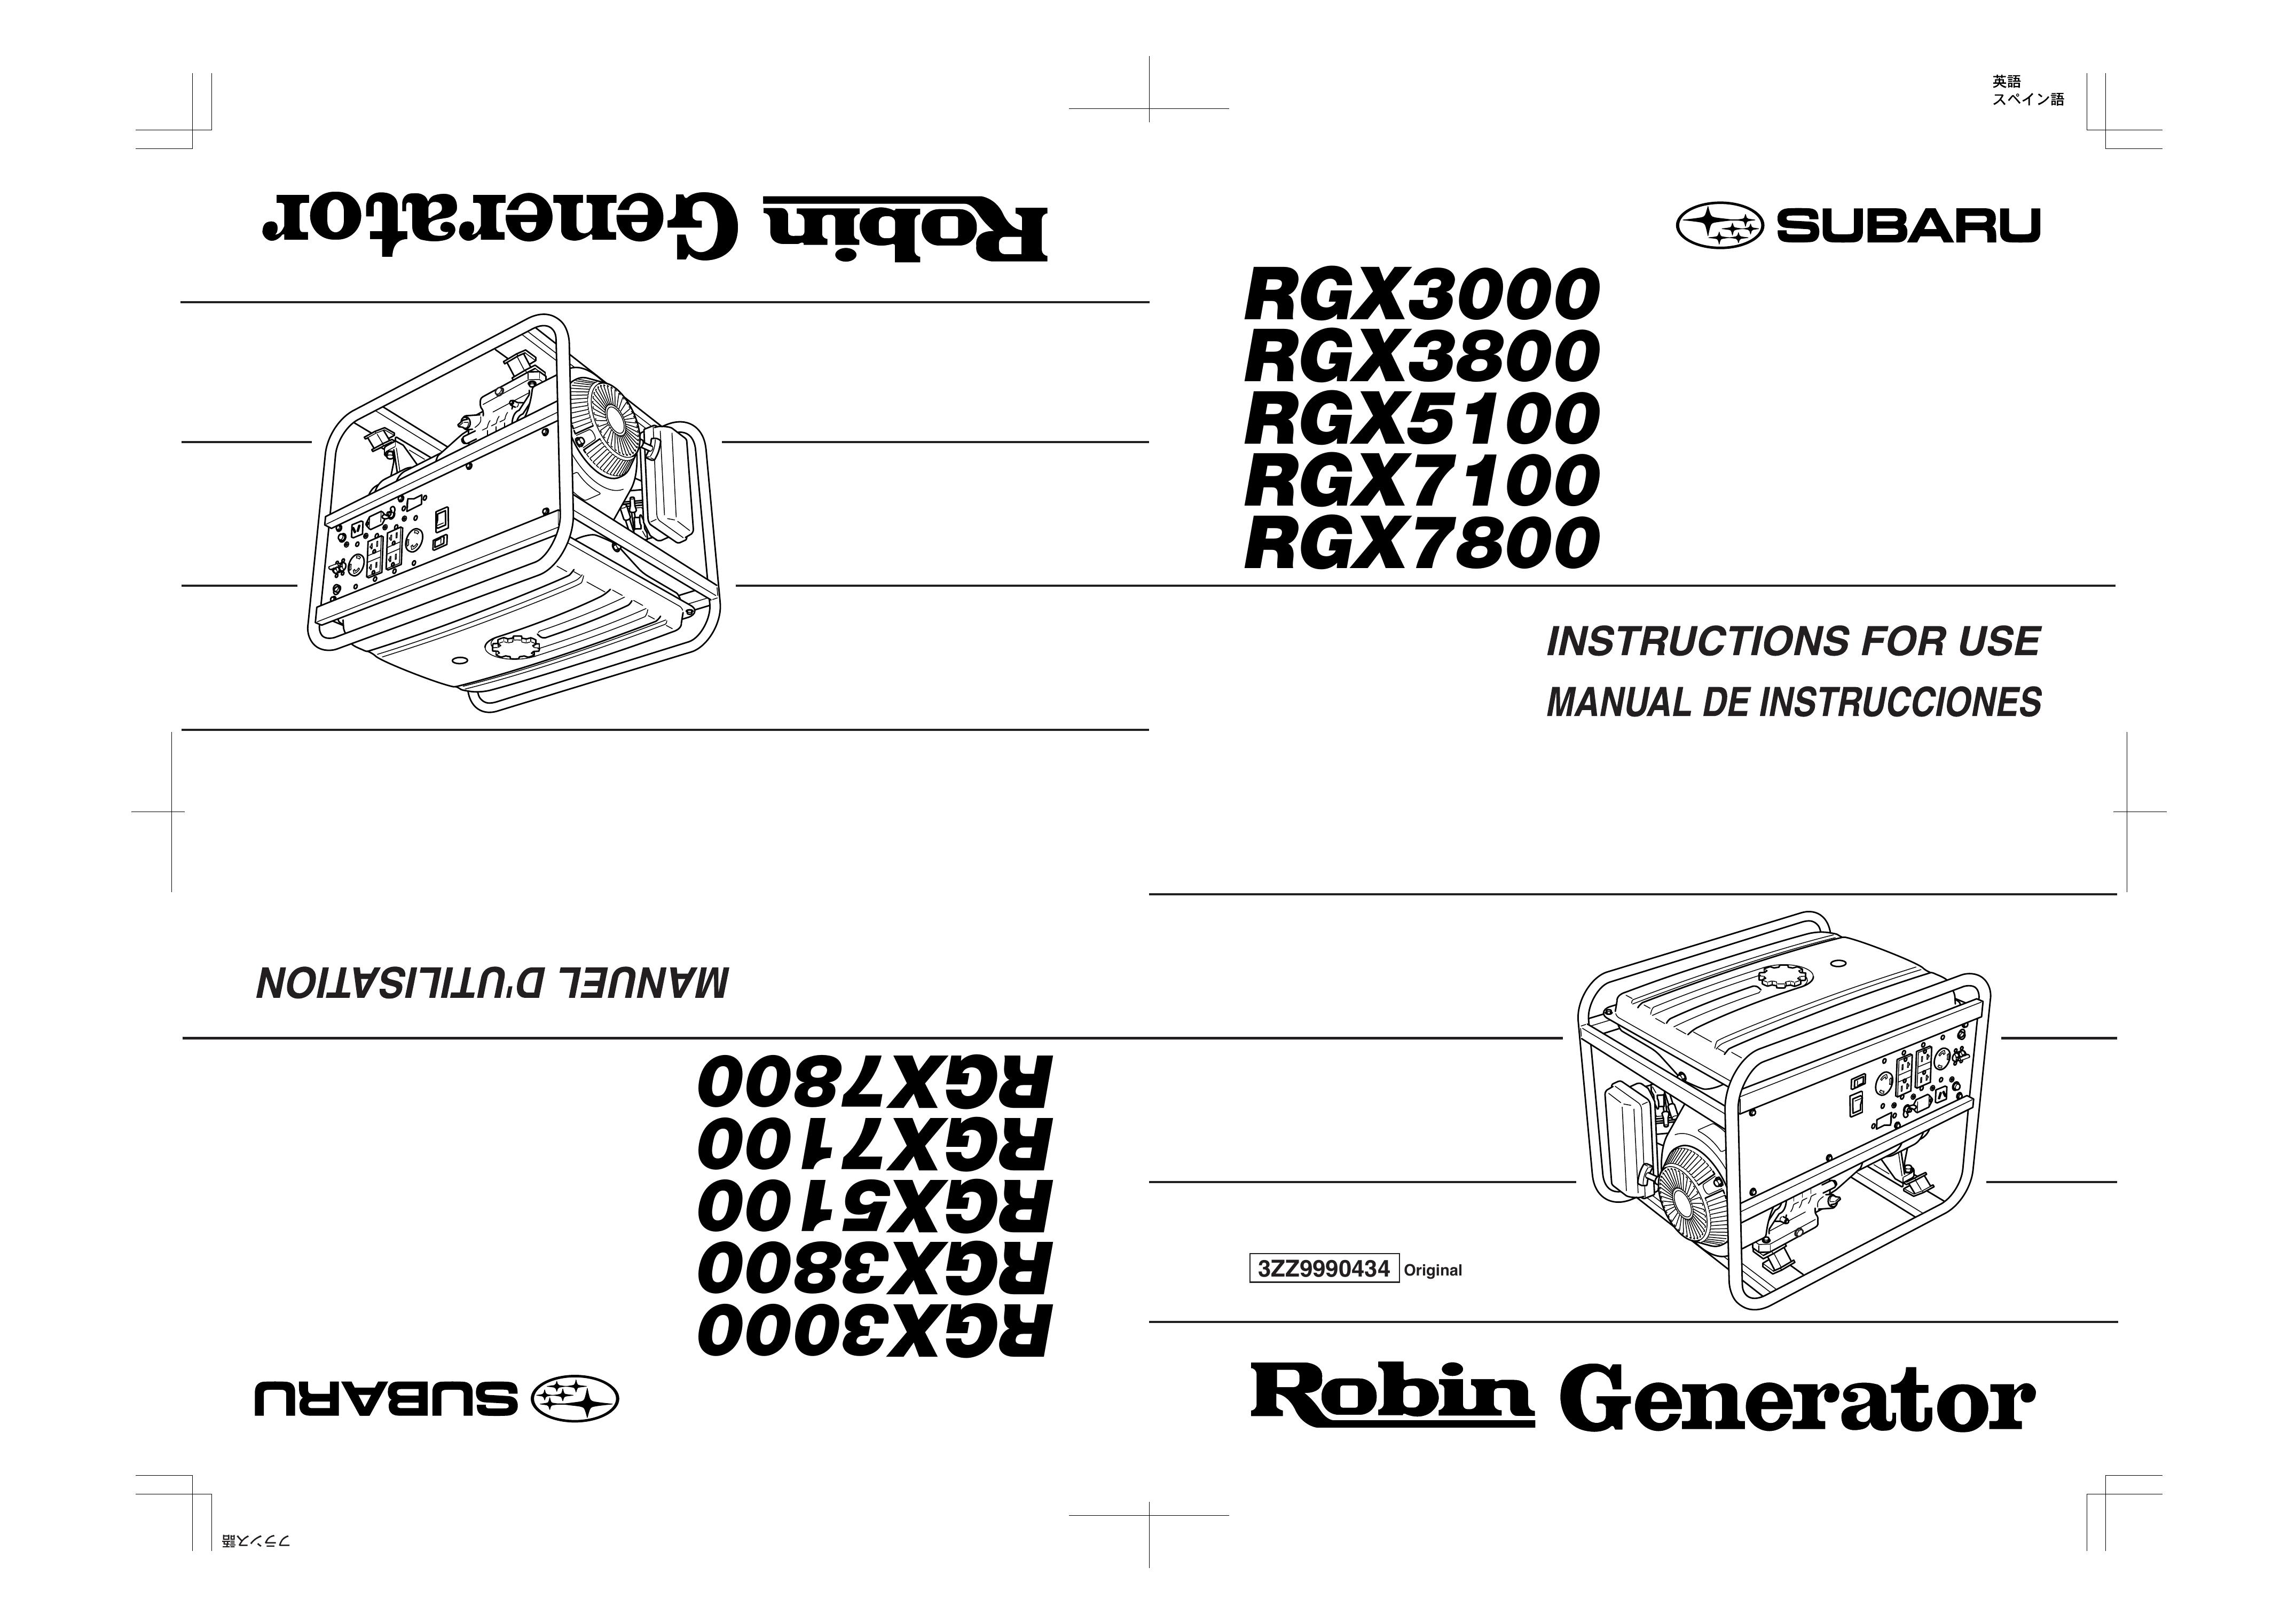 Subaru RGX7100 Portable Generator User Manual